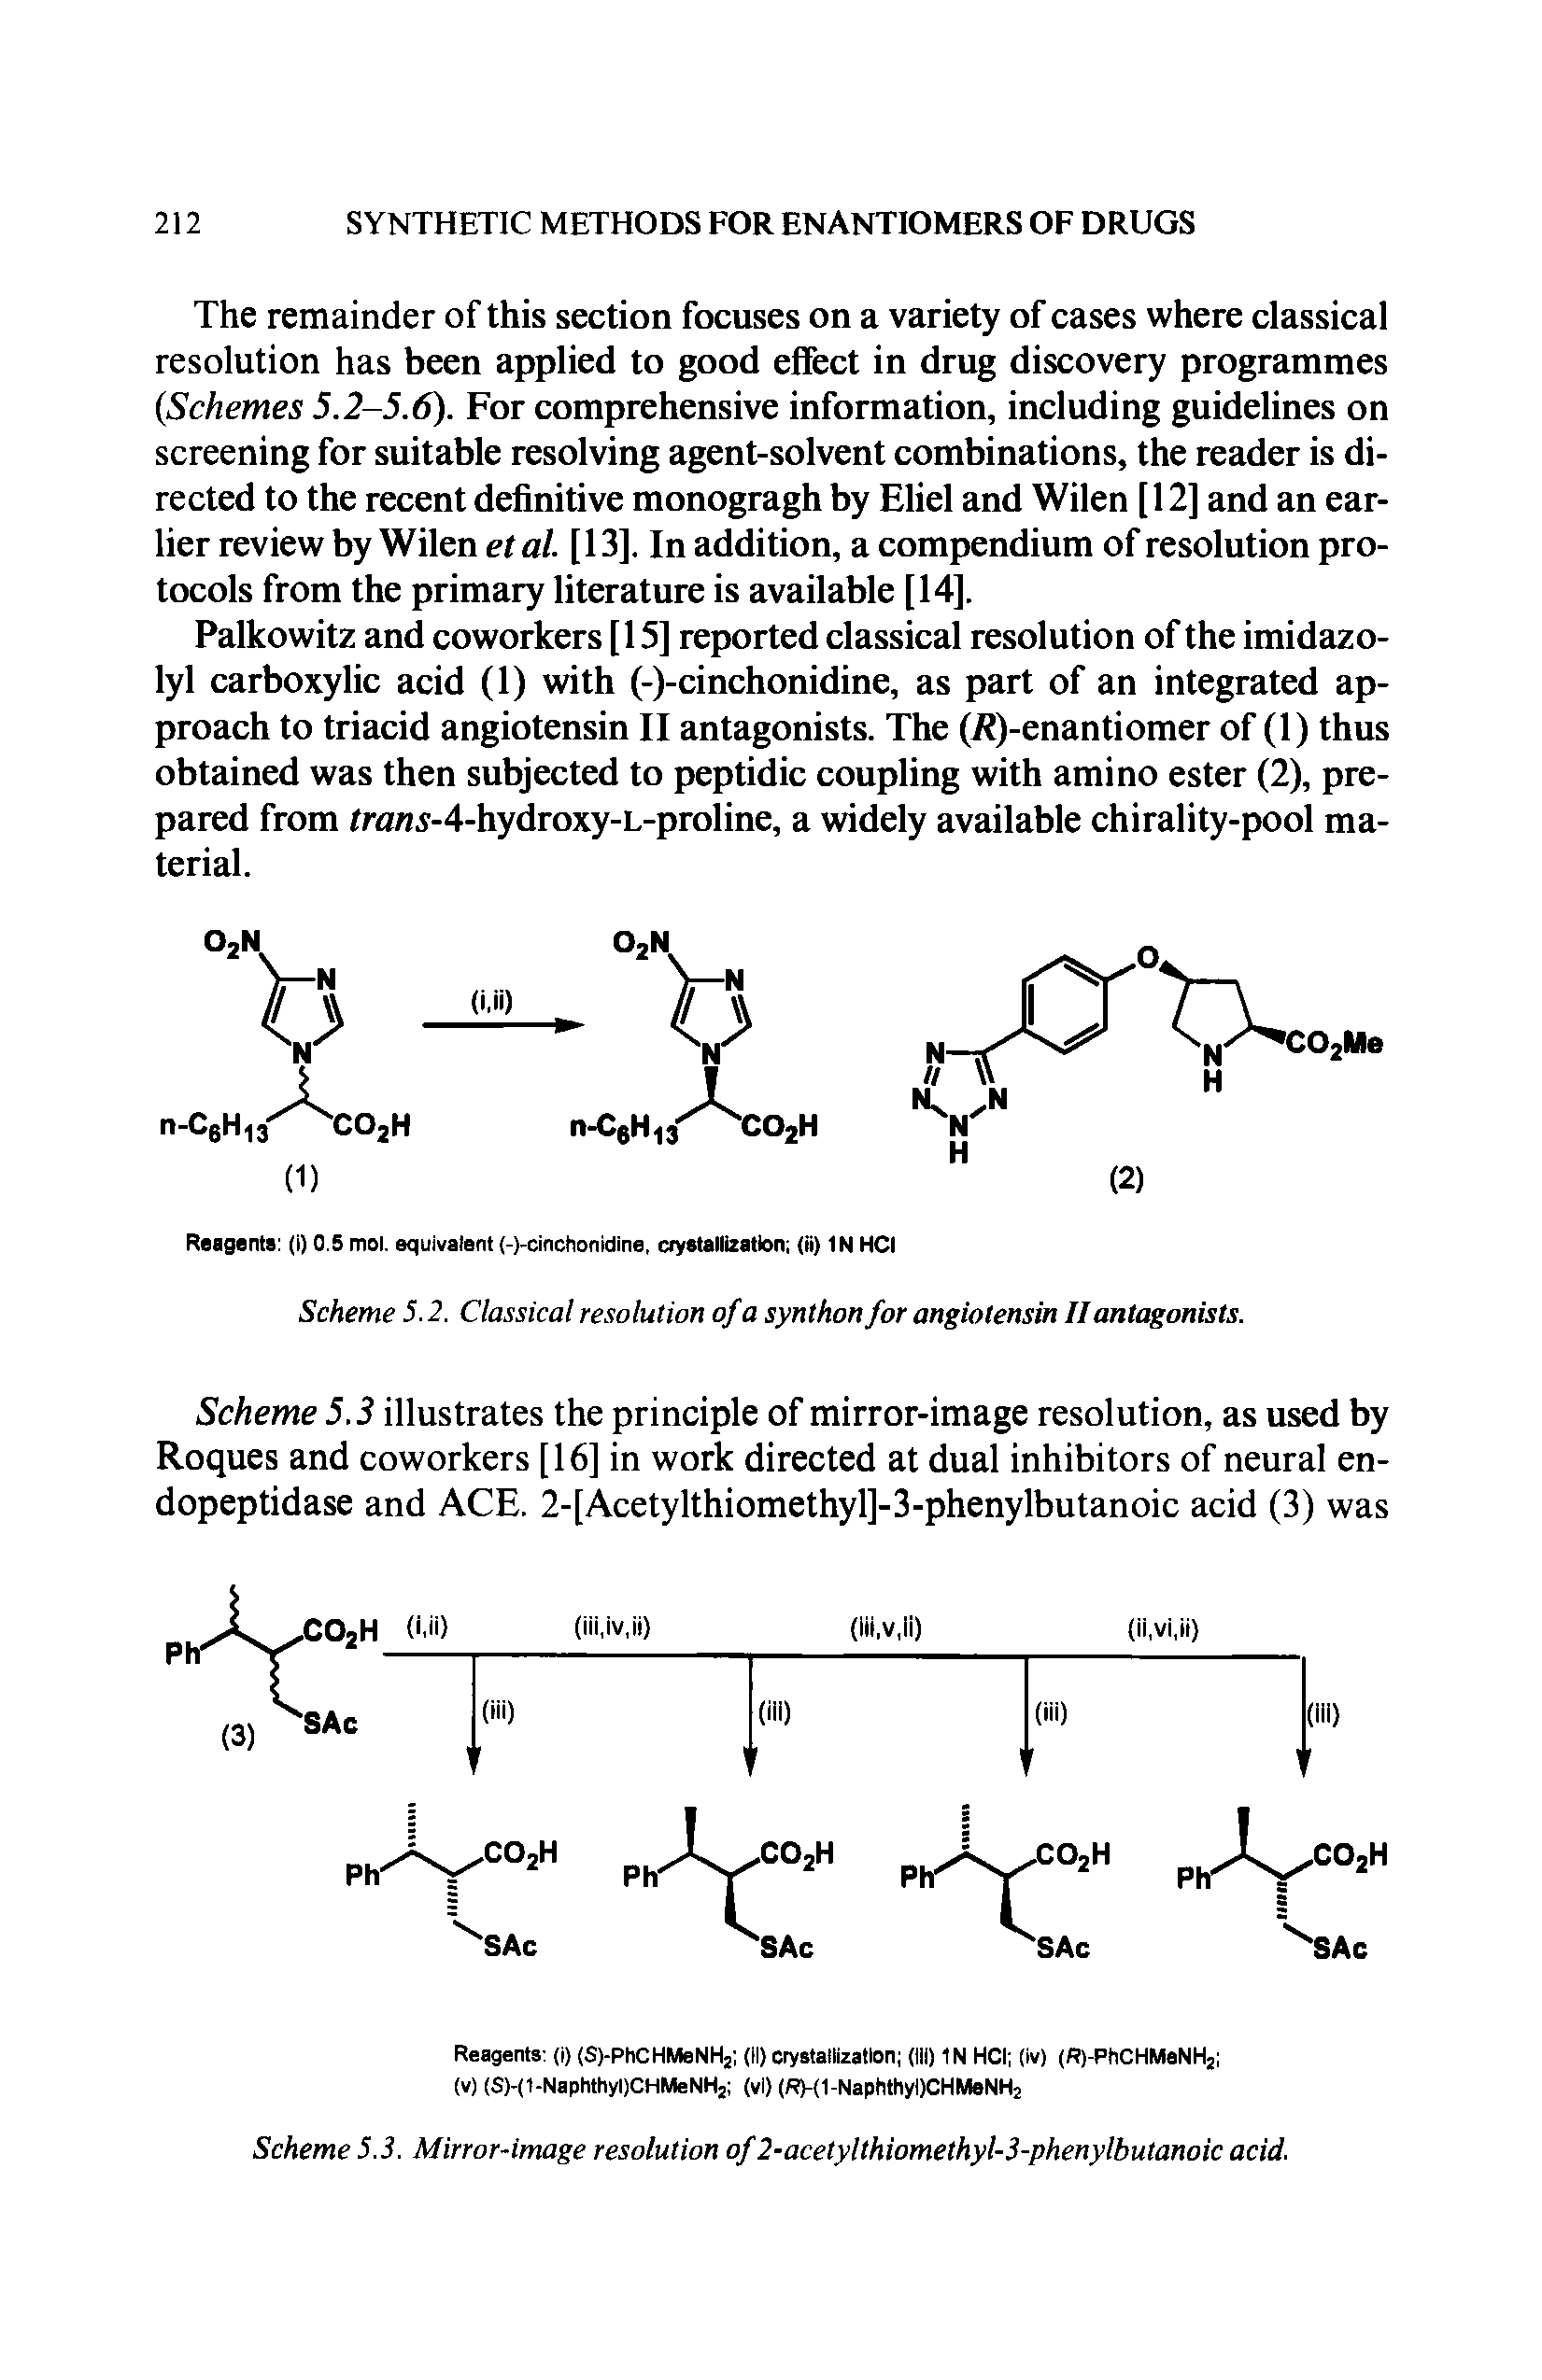 Scheme 5.3. Mirror-image resolution of 2-acetylthiomethyl-3-phenylbutanoic acid.